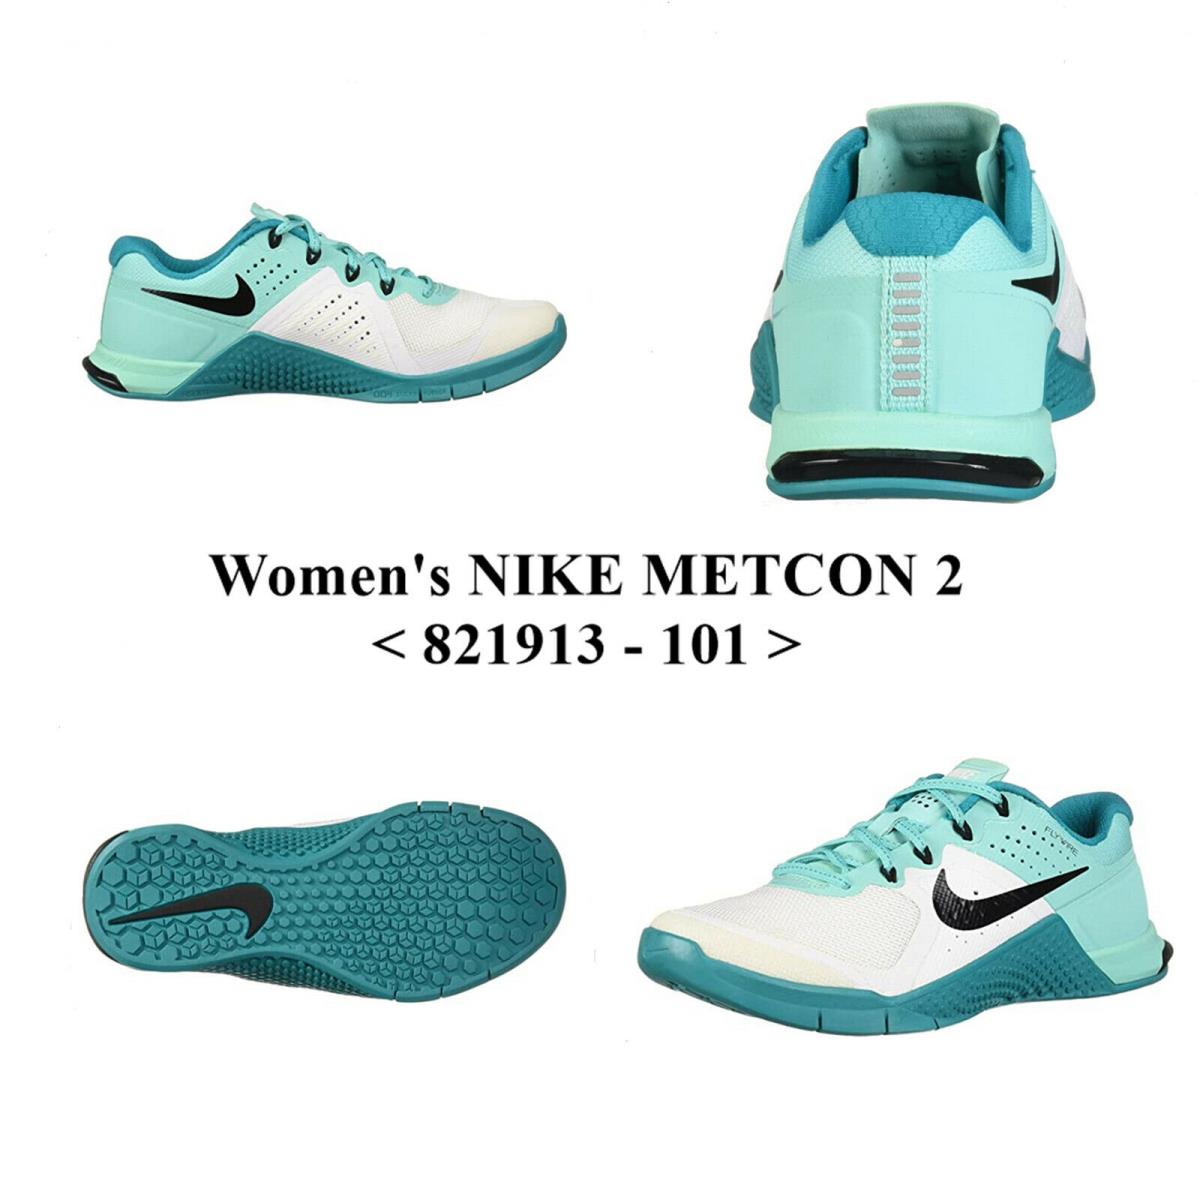 Women`s Nike Metcon 2 821913 - 101 Training Shoes.new with Box - WHITE / BLACK-HYPER TURQ-ENERGY